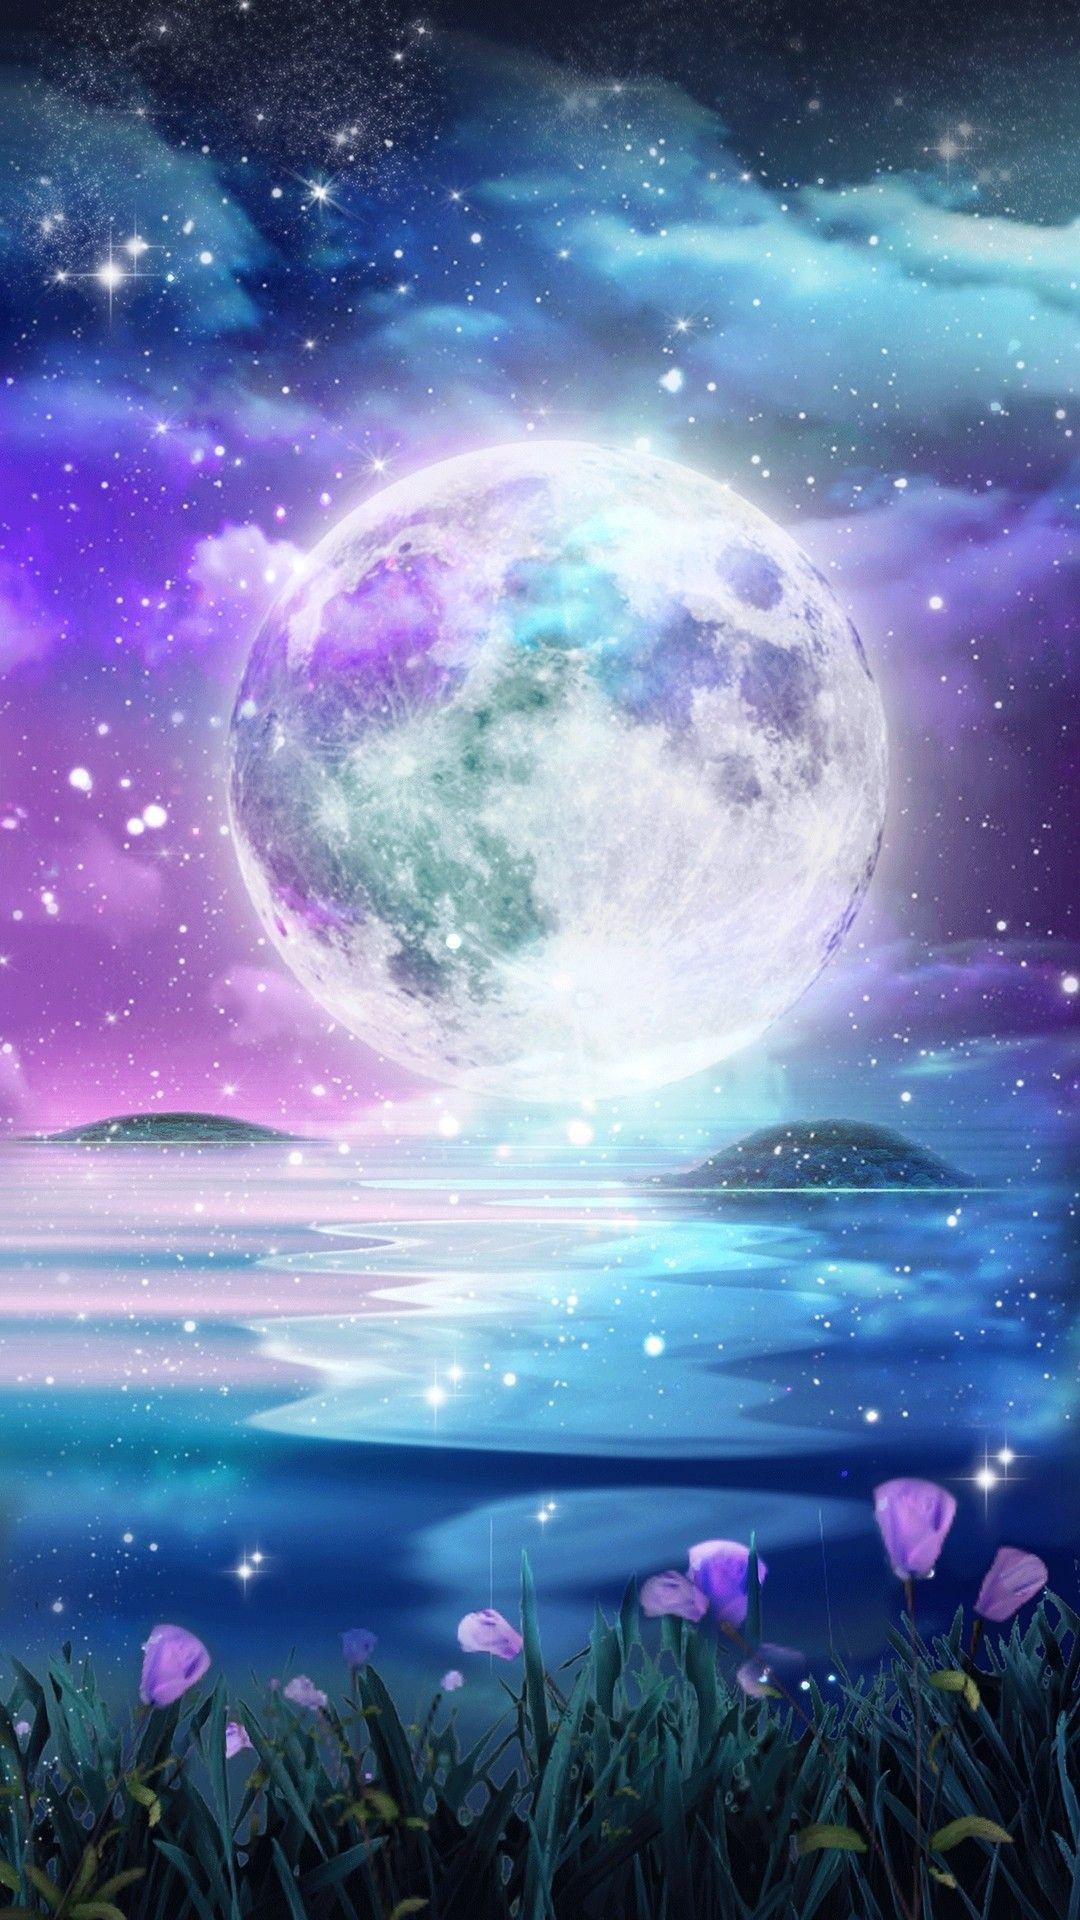 Cute Moon Galaxy Wallpapers - Top Free ...